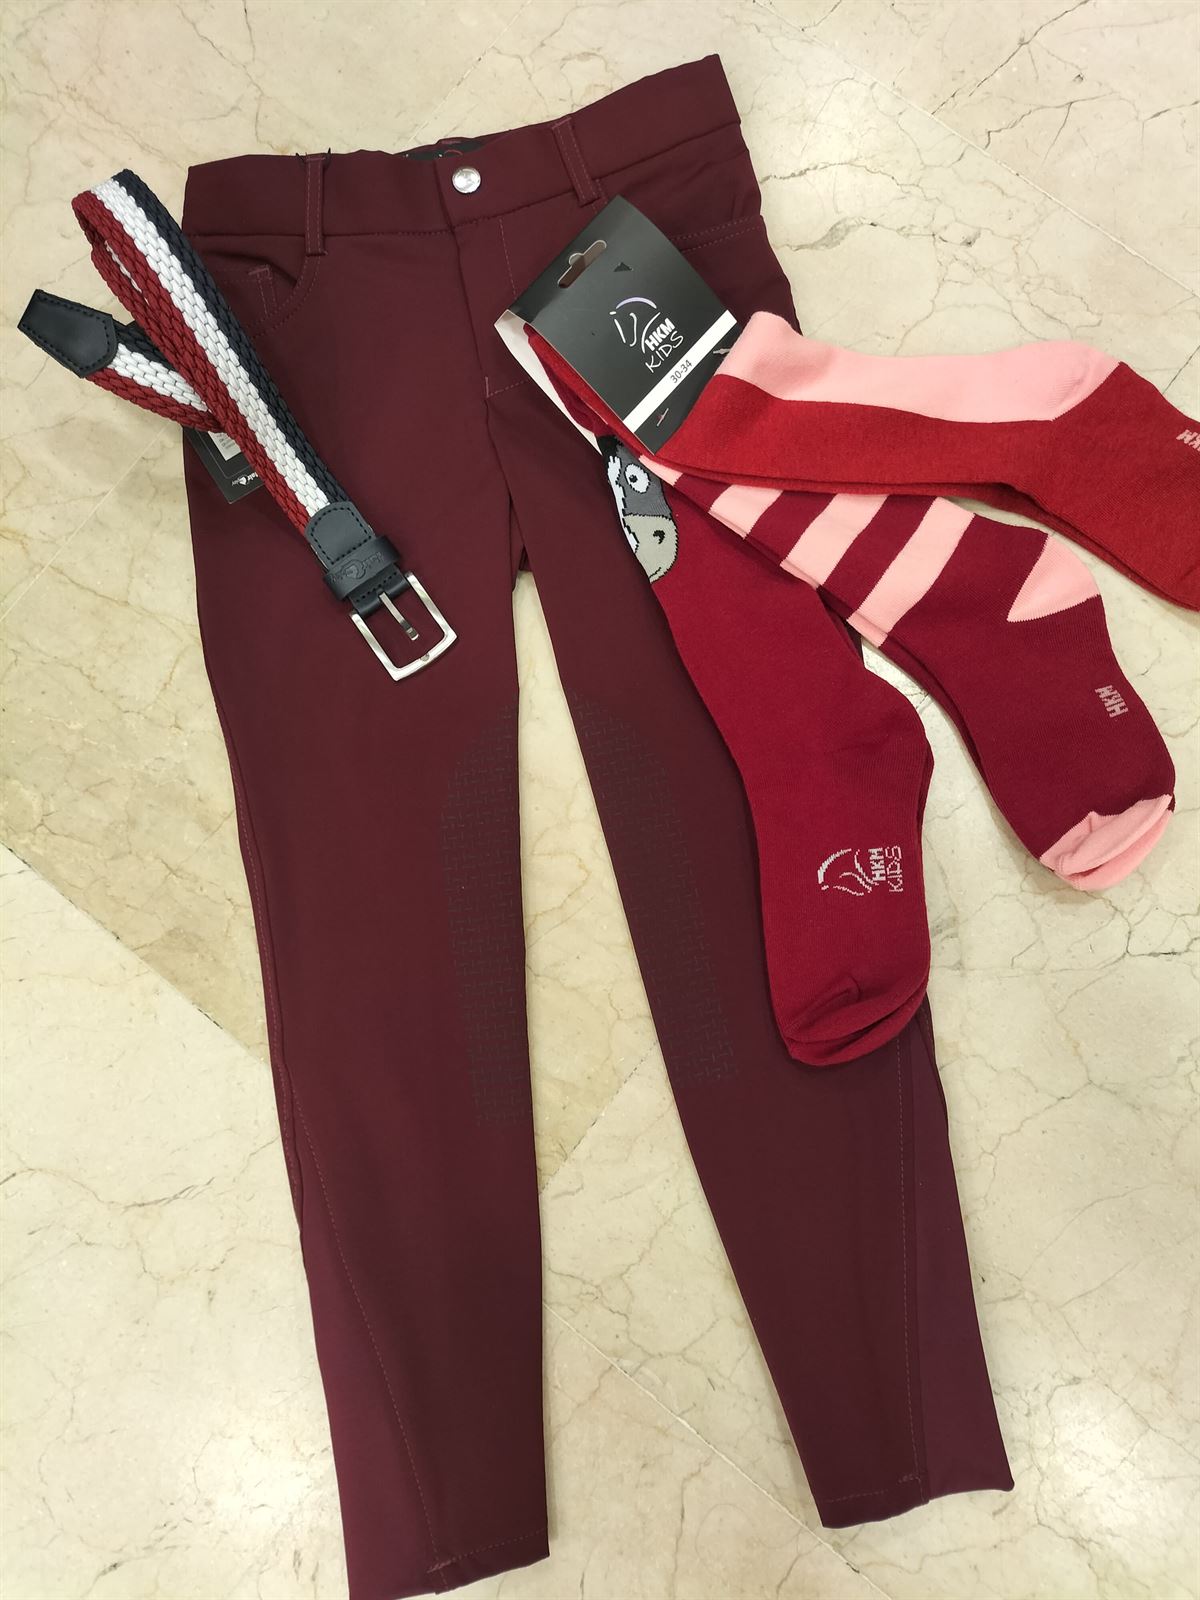 Pantalón unisex HKM Sports Equipment Sunshine color burdeos, rodilla silicona TALLA 7-8 AÑOS - Imagen 2